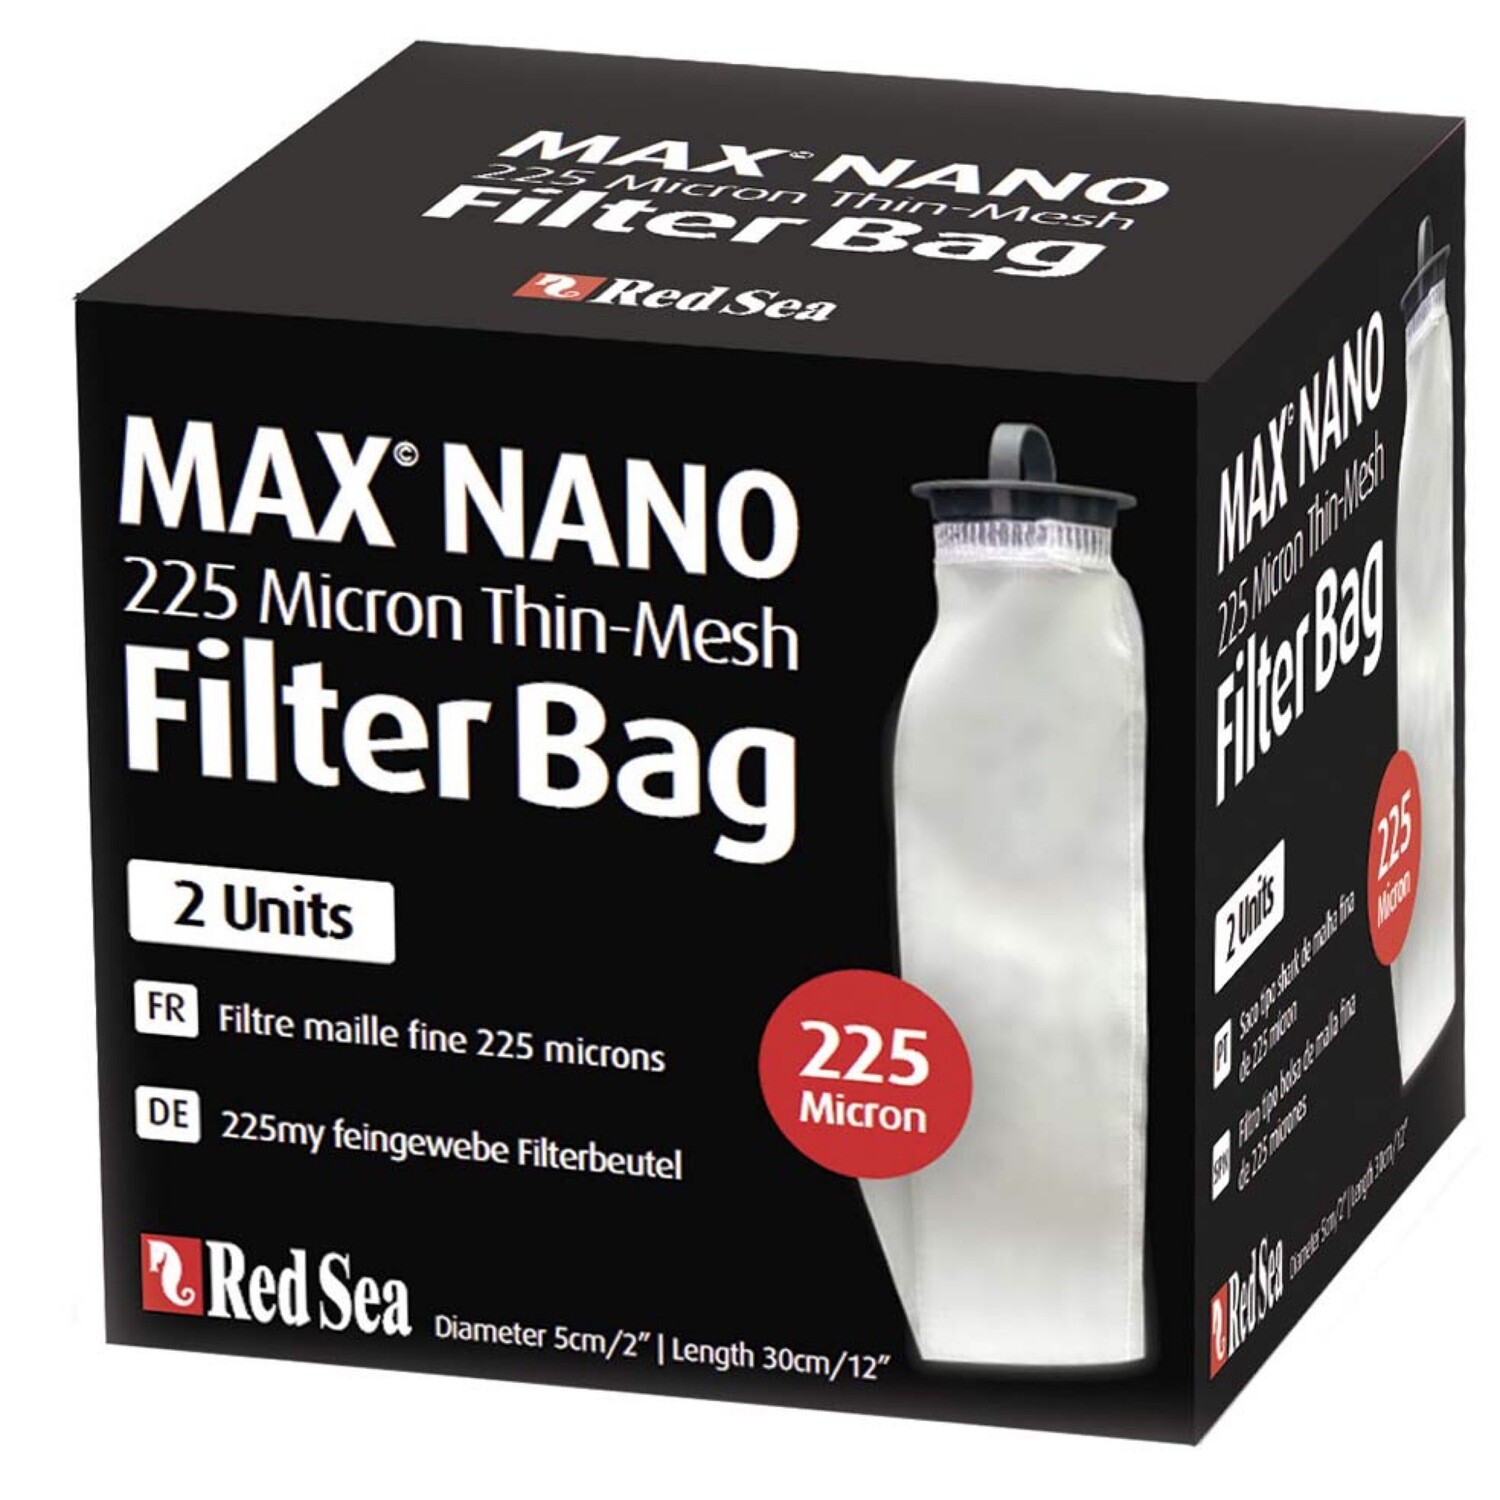 Red Sea Max Nano Thin-Mesh Filter Bag 225 Micron - 2 pack